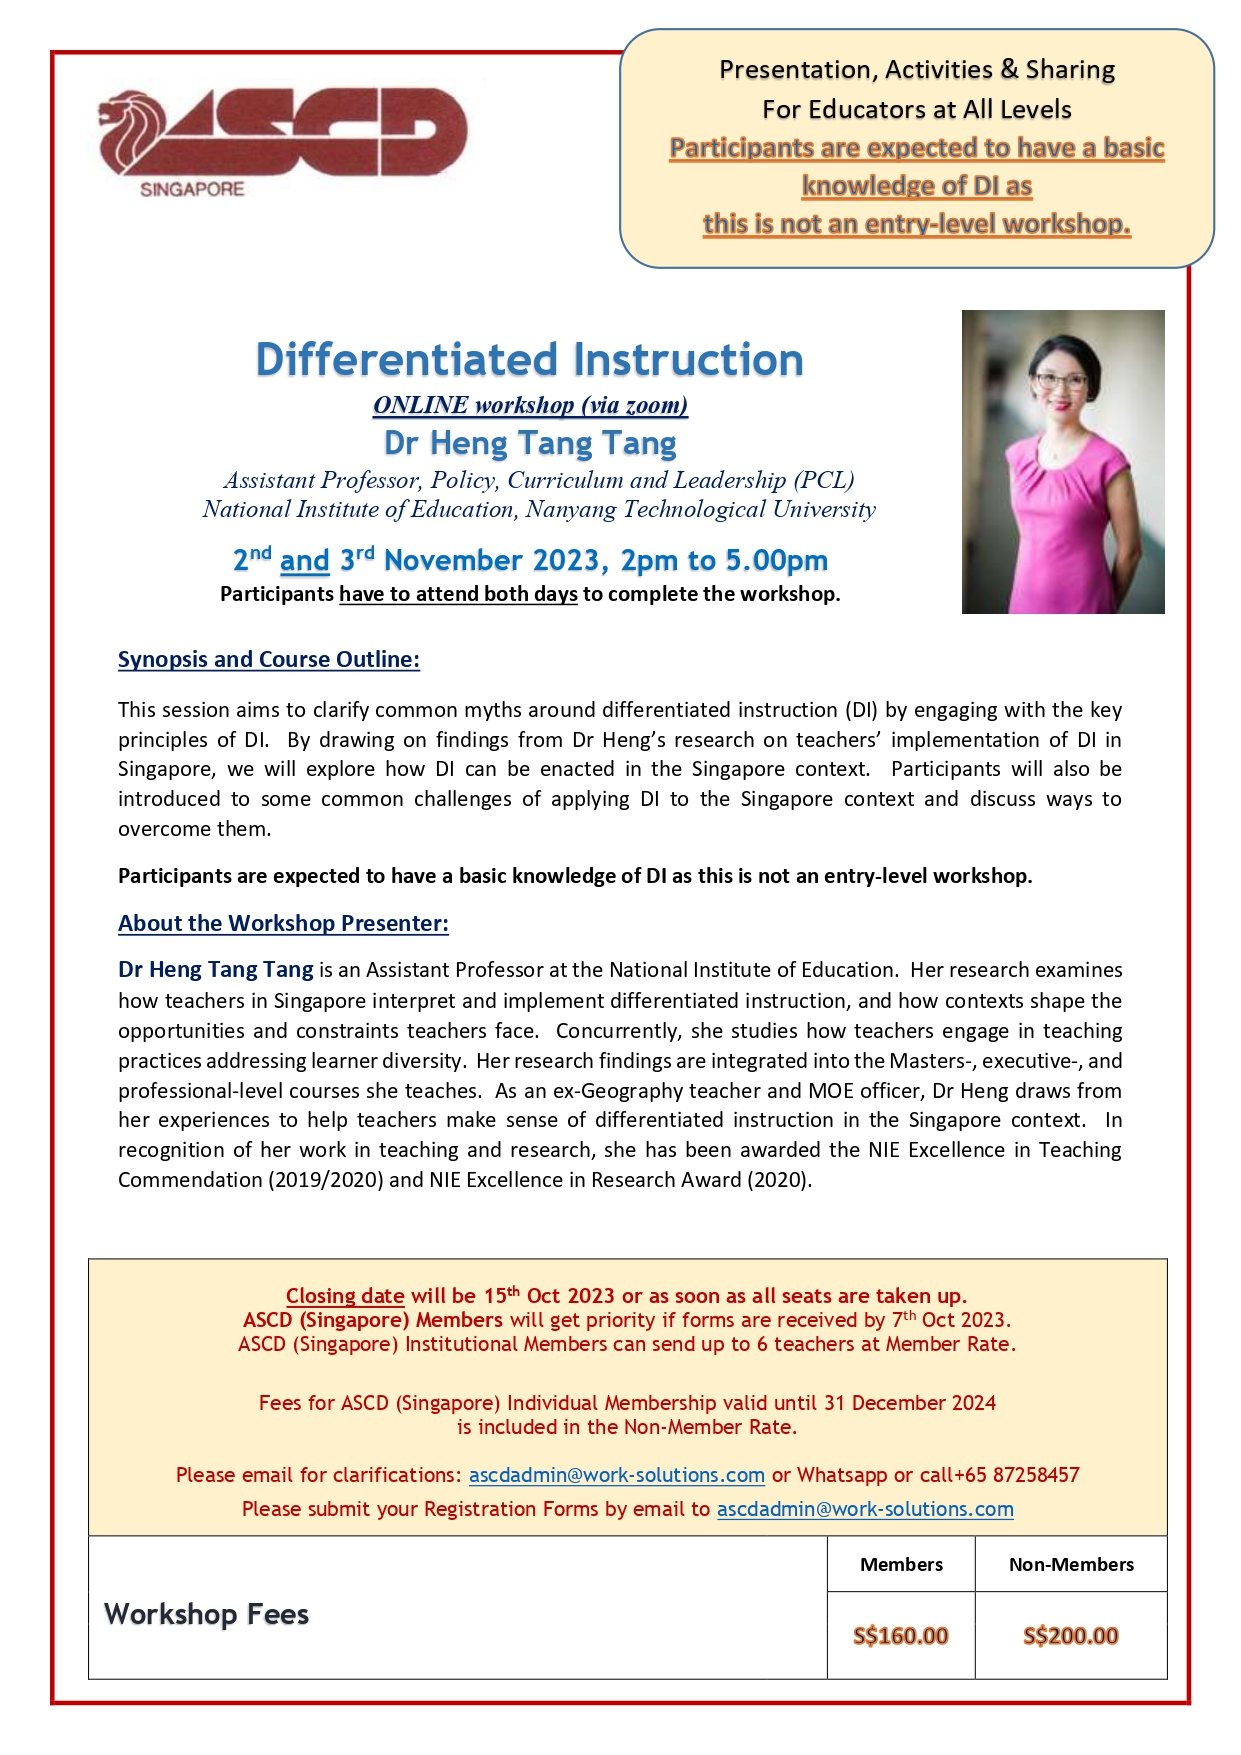 Differentiated Instruction Dr Heng Tang Tang 2-3 Nov 2023.jpg